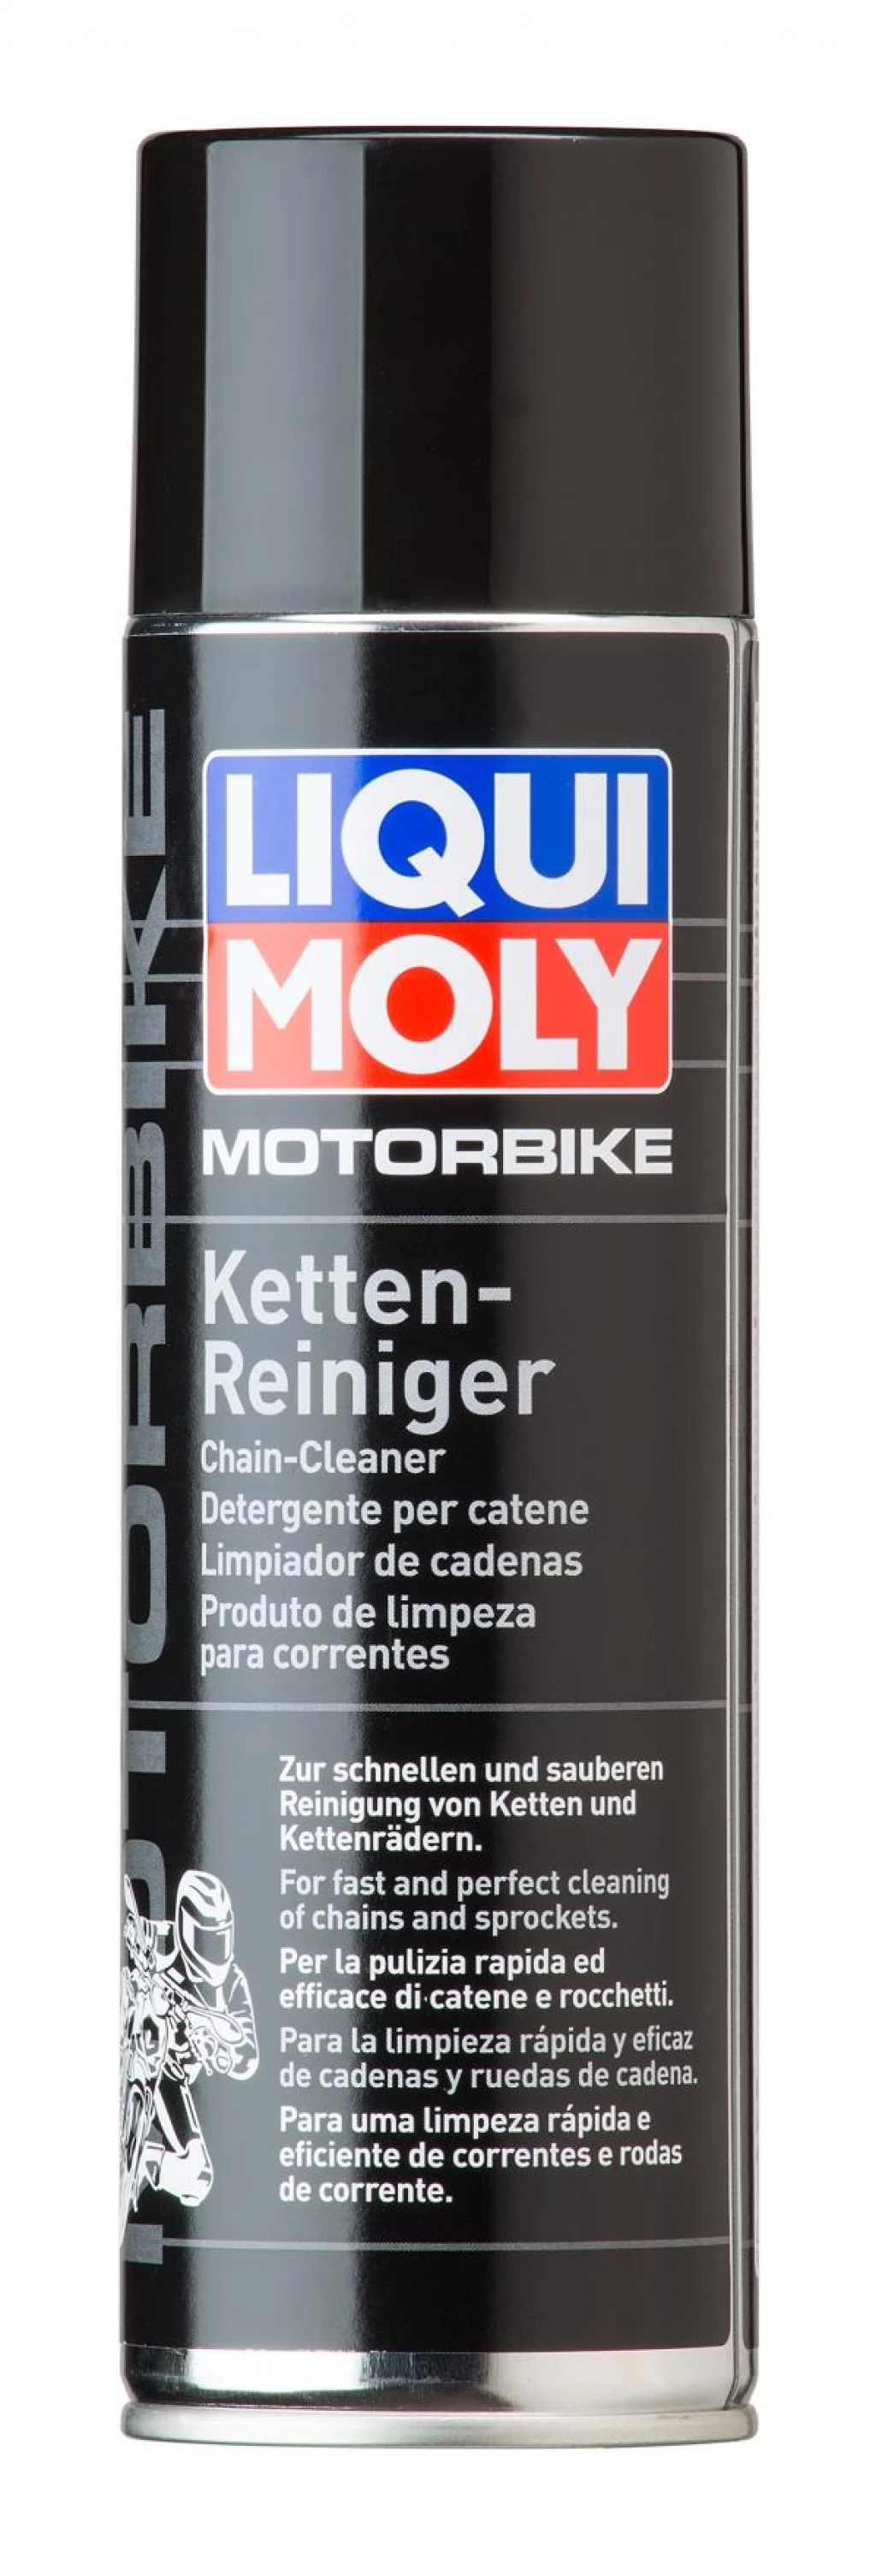 Очист.приводной цепи мотоц.Motorrad Ketten-Rein. (0,5л)